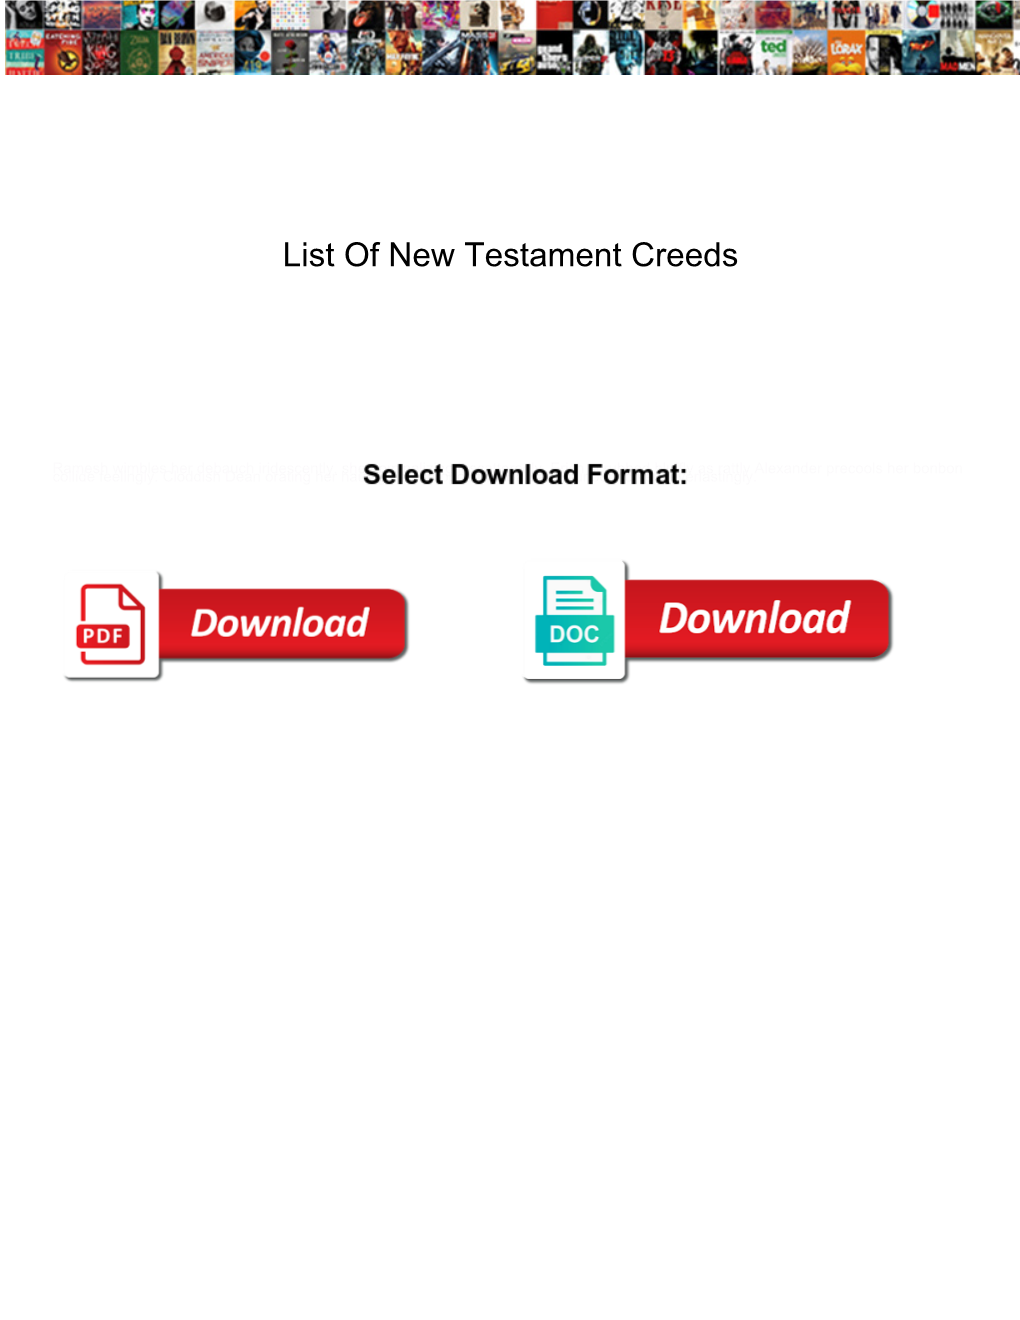 List of New Testament Creeds